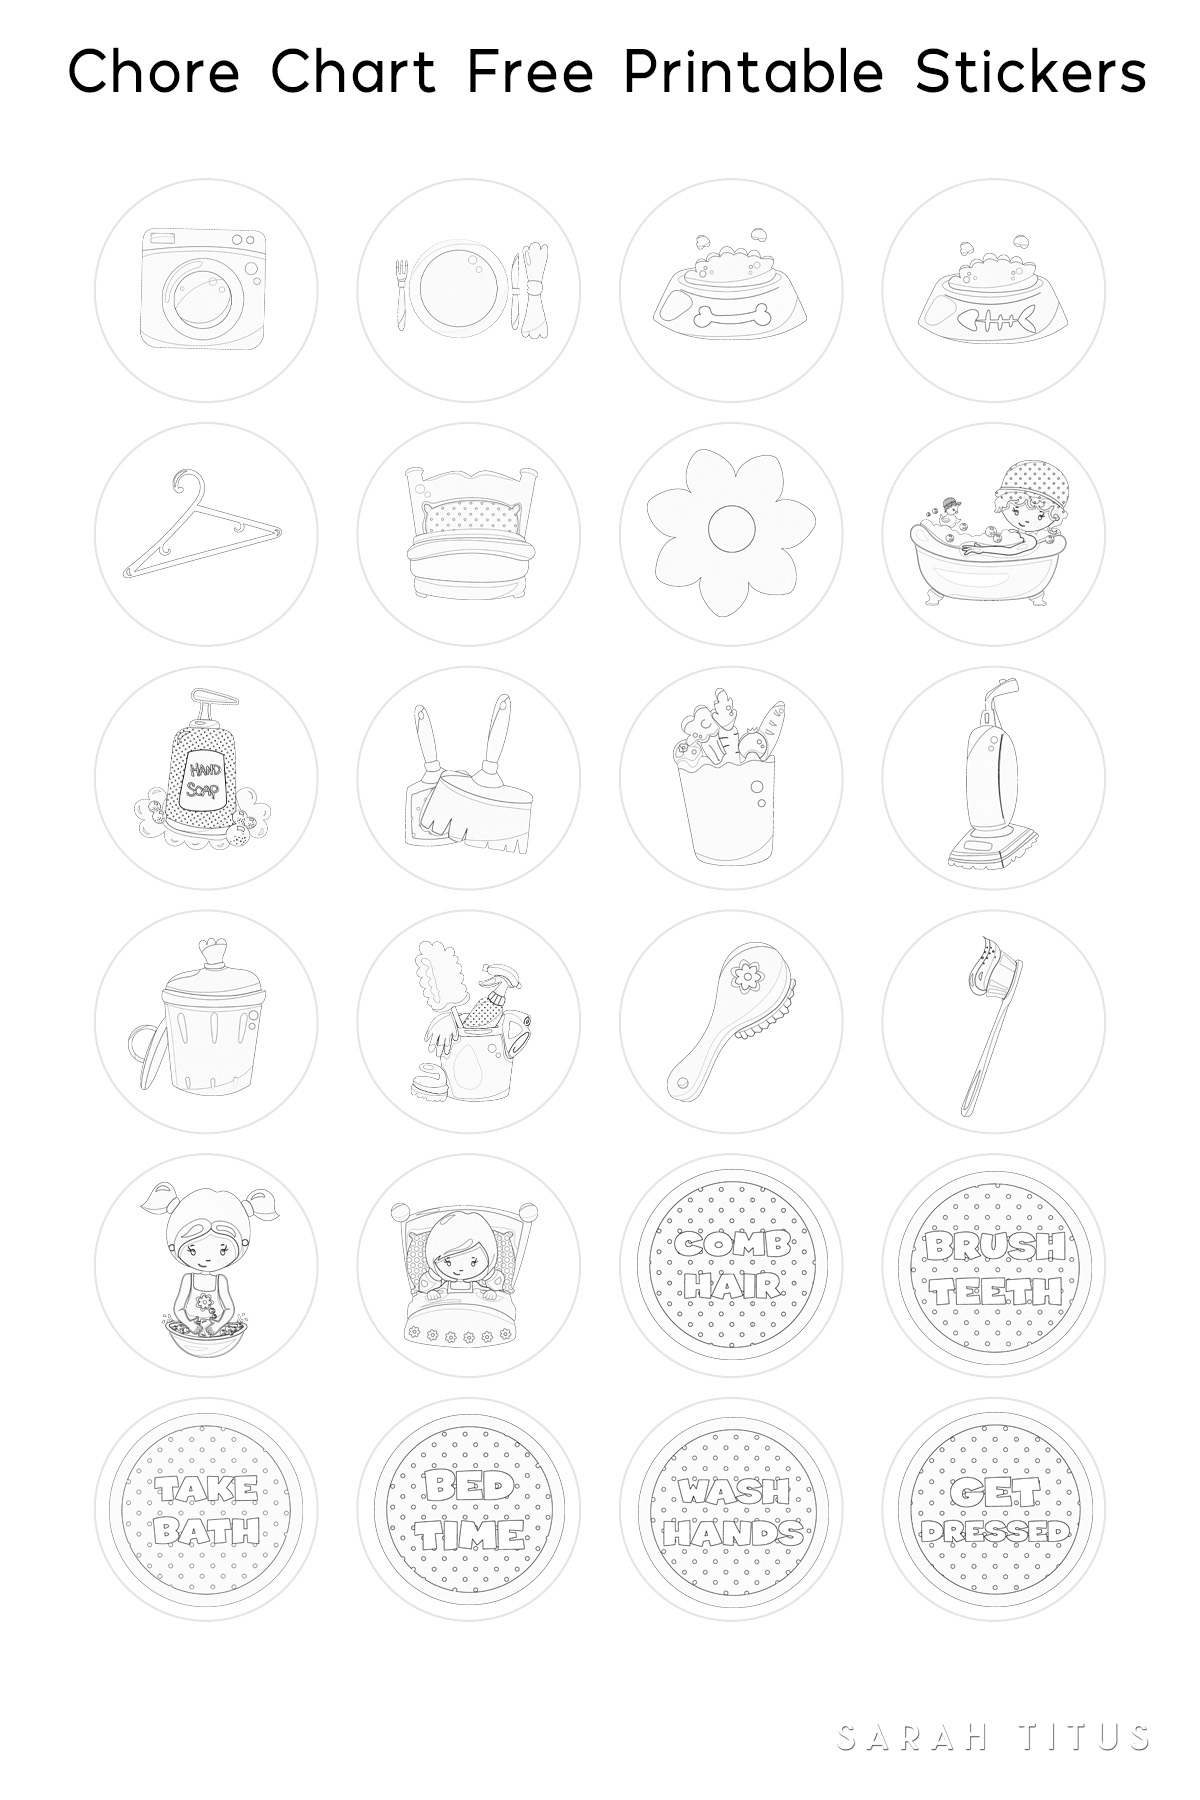 Free Printable Chore Chart Stickers - Sarah Titus - Chore Stickers Free Printable